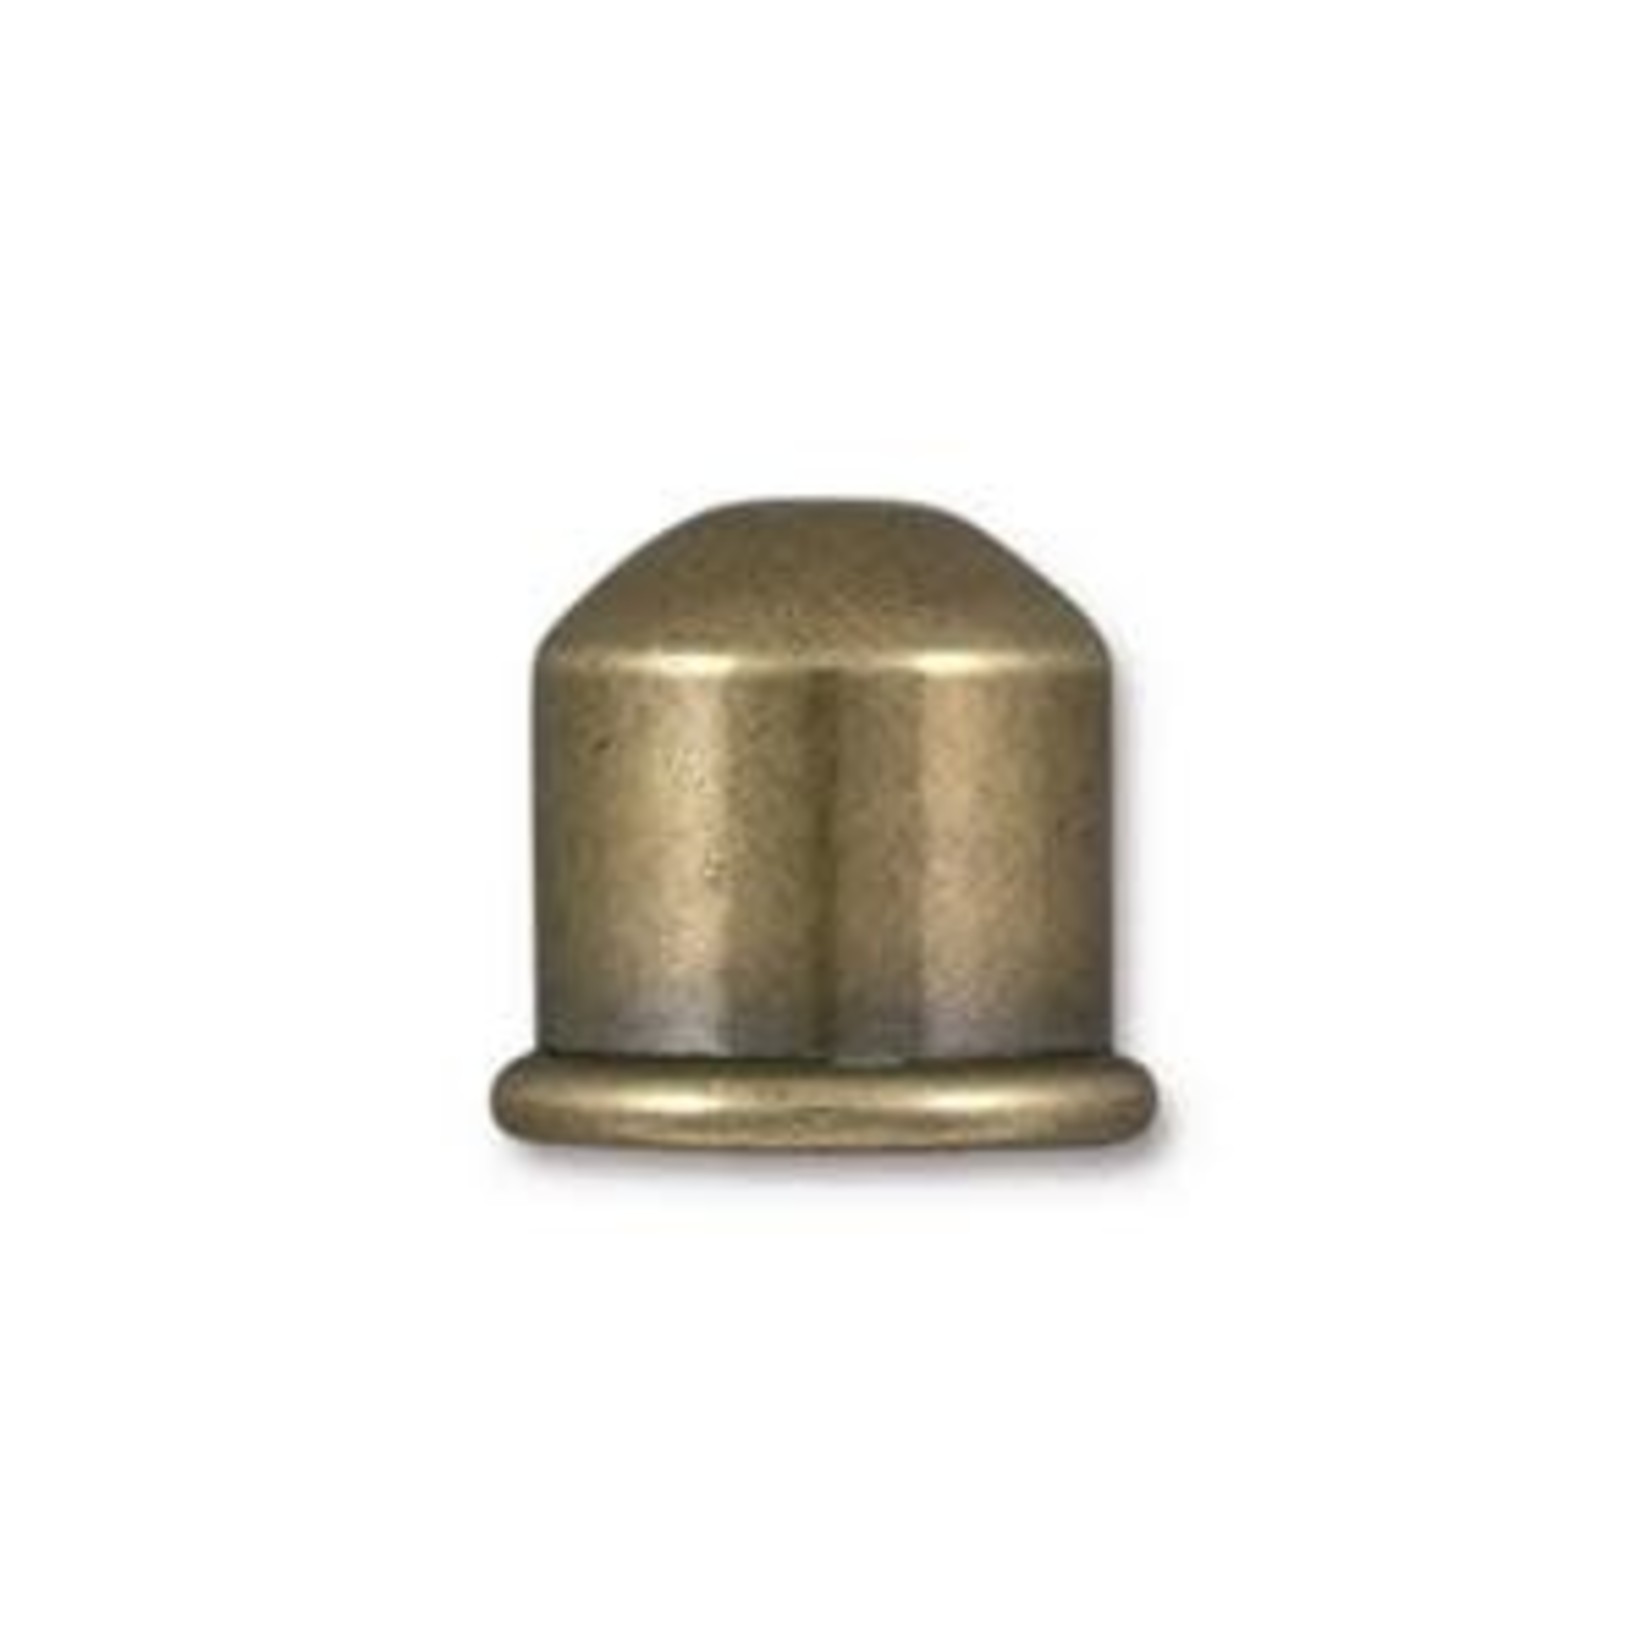 TierraCast Tierracast Oxidized Brass Cupola Cord End 10mm - Single